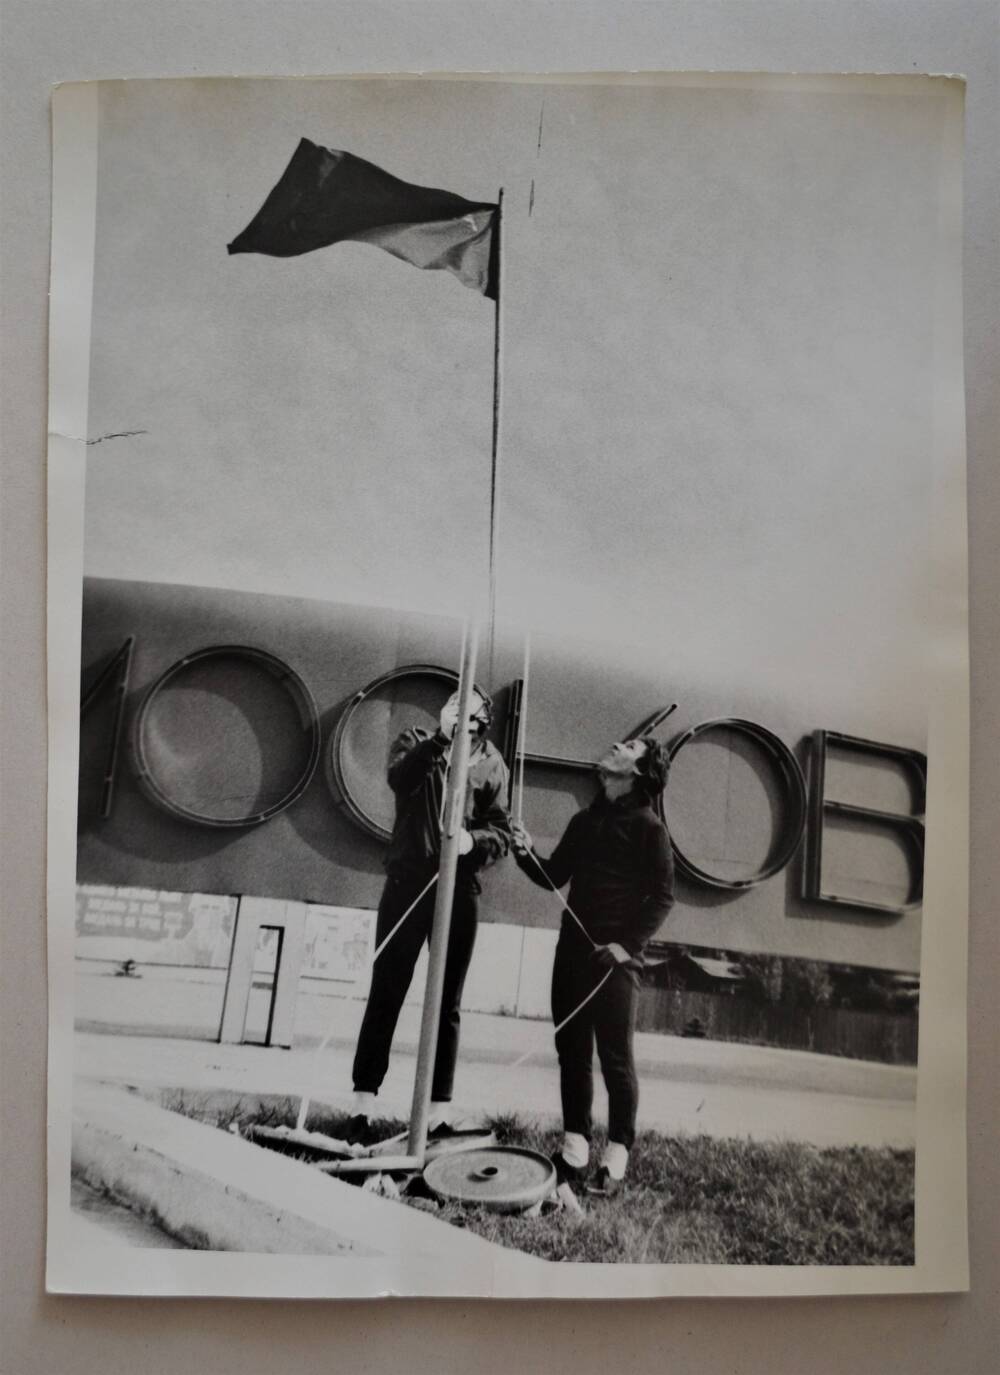 Фото «Поднятие флага».
1977 г. г. Горький Московский район.